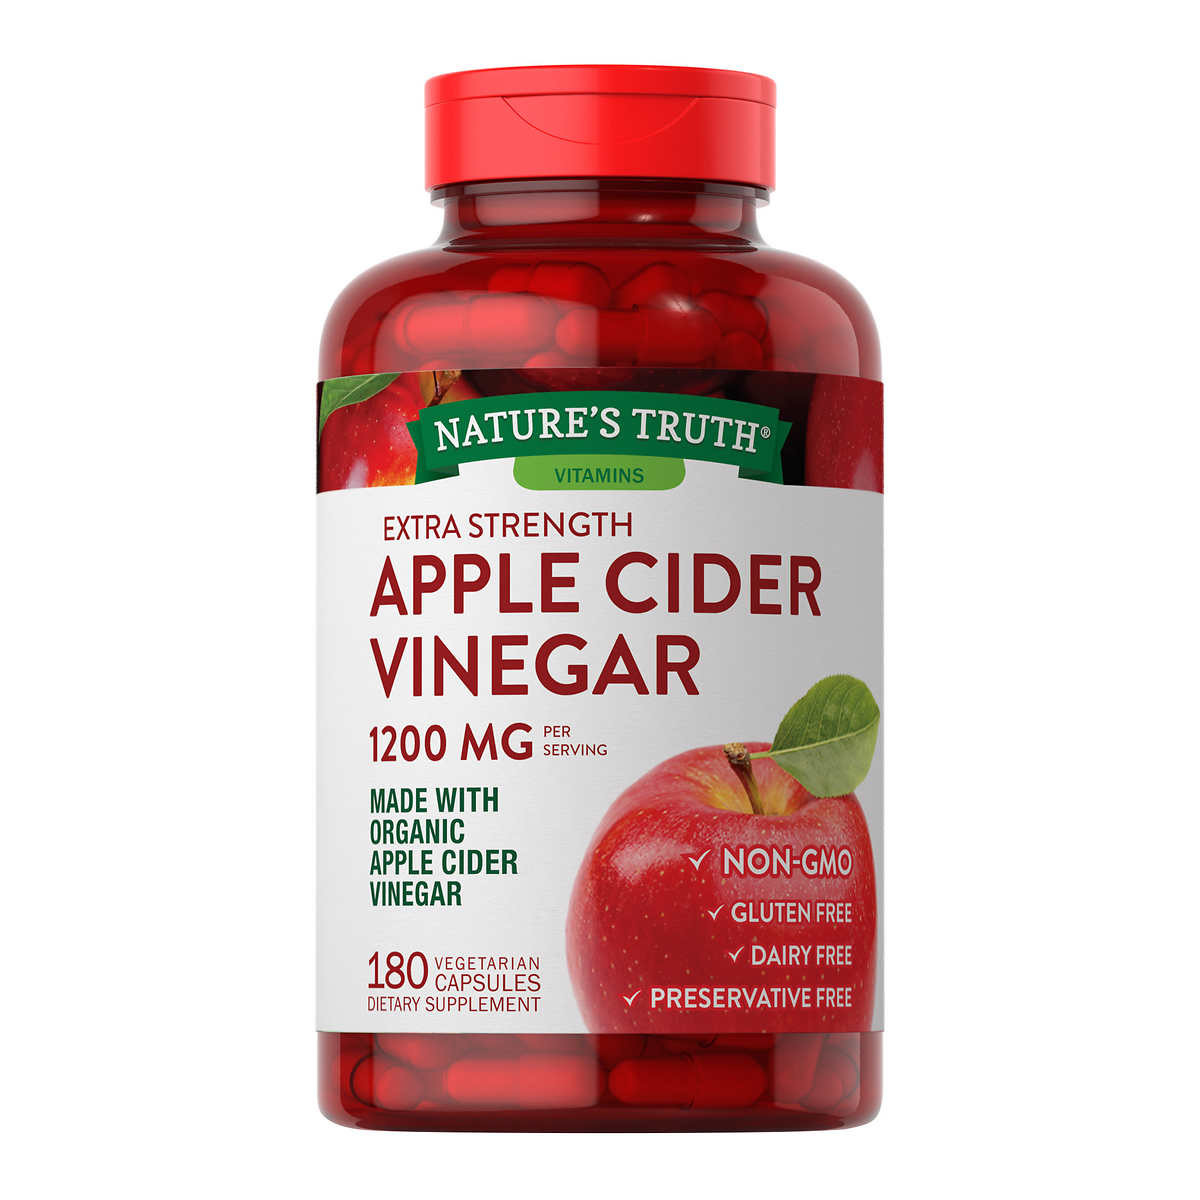 Nature's Truth Organic Apple Cider Vinegar Gummies Apple - 120 Vegan Gummies